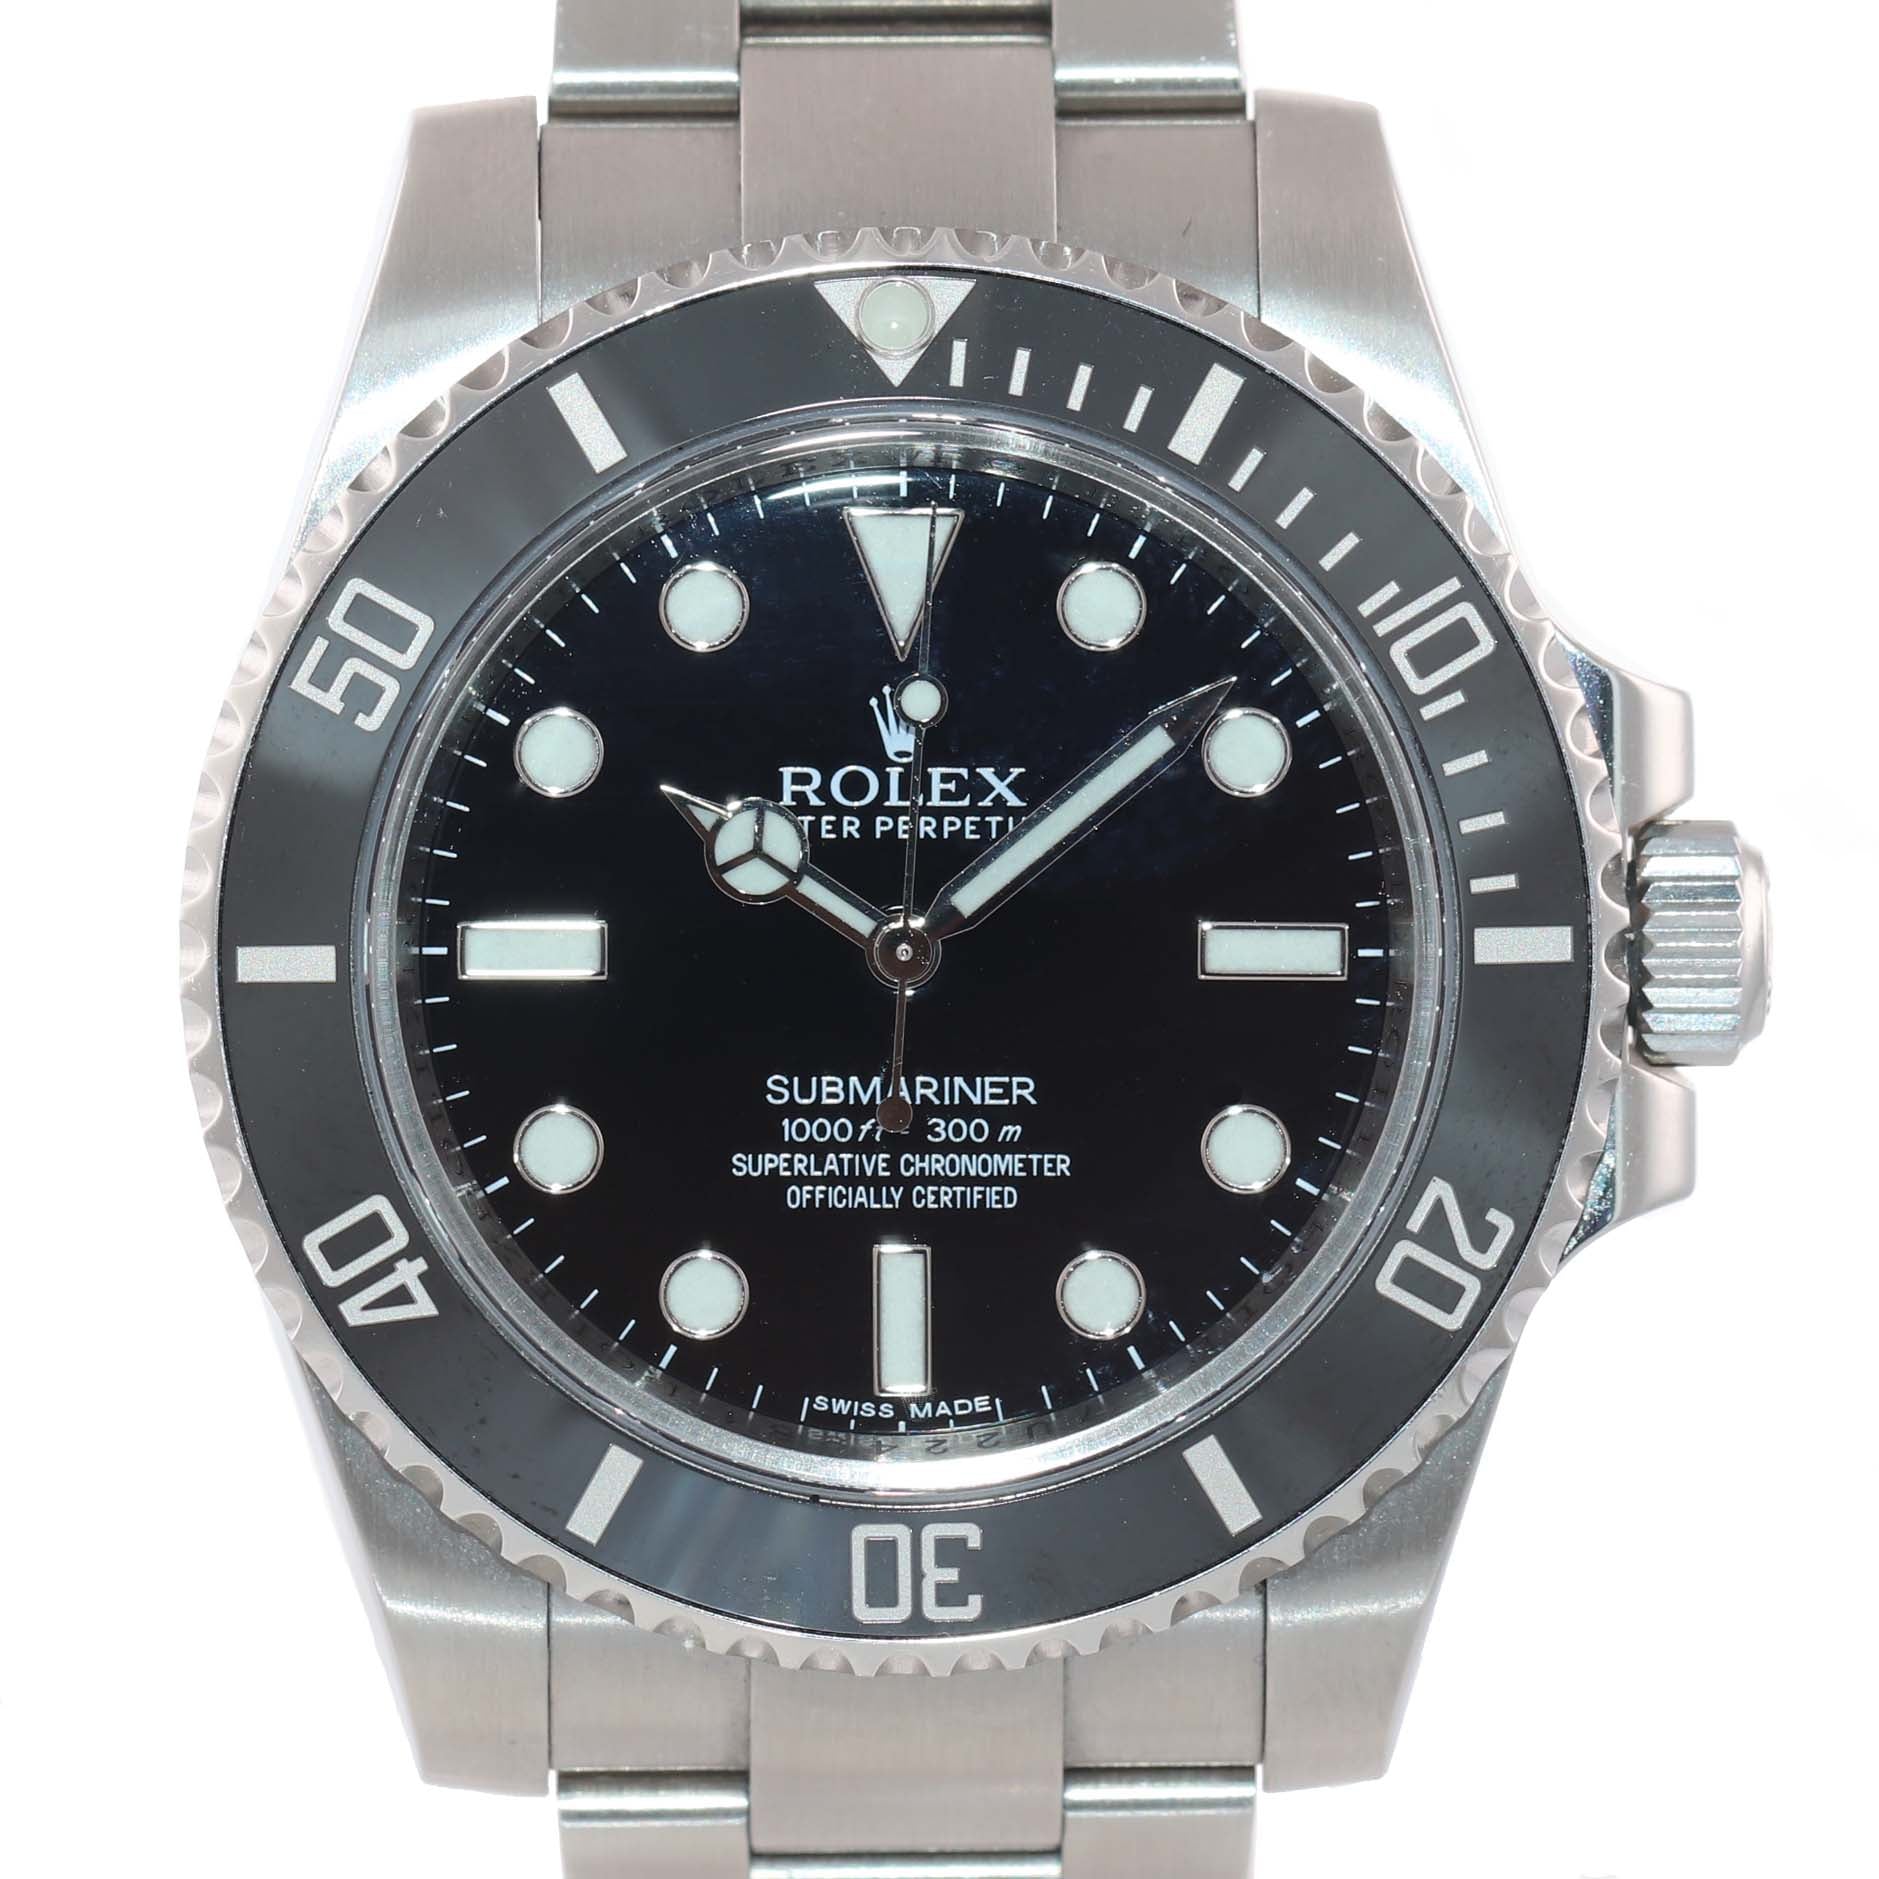 2017 PAPERS MINT Rolex Submariner No-Date 114060 Steel Black Ceramic Watch Box